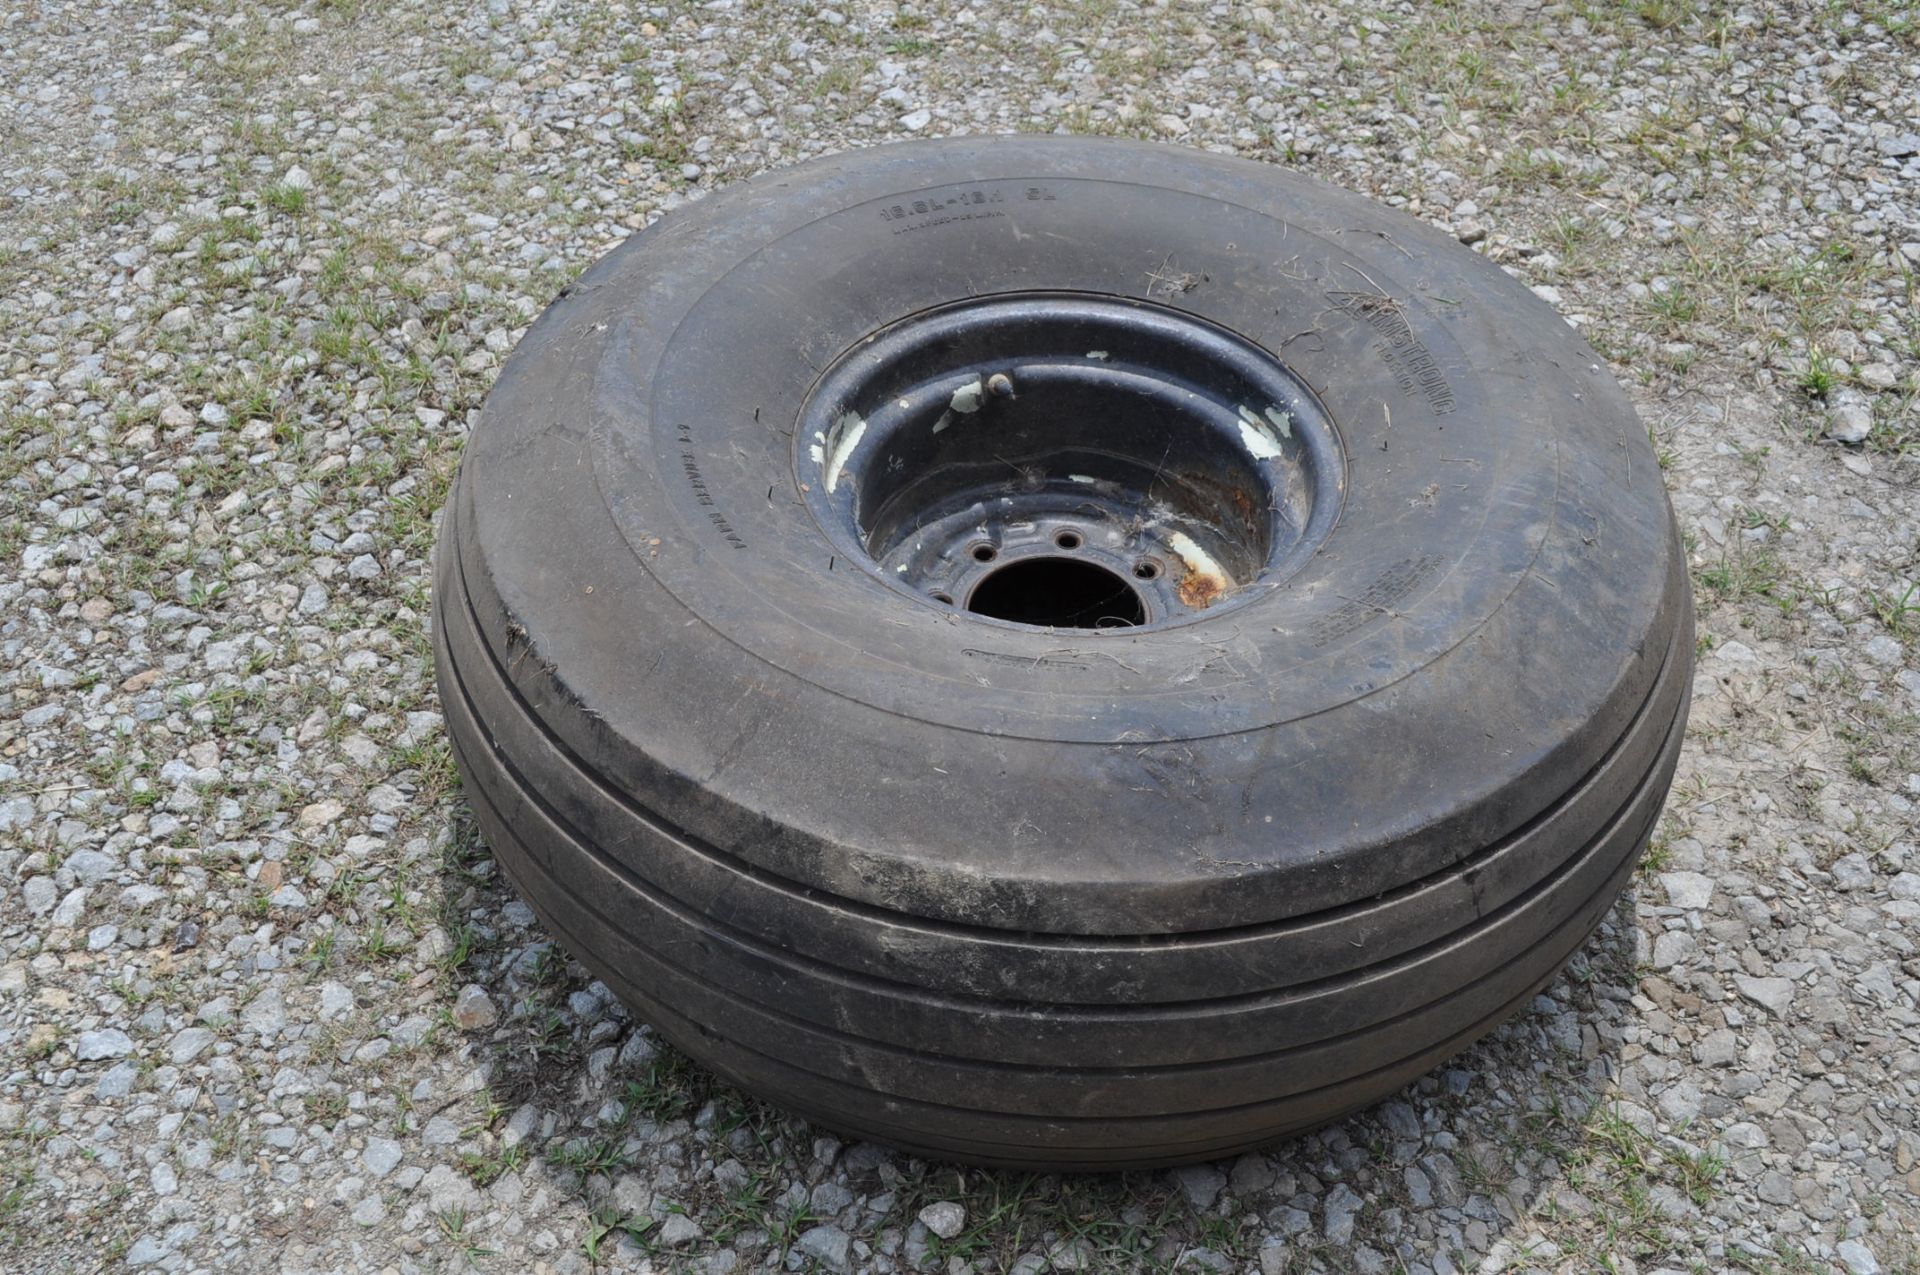 16.5L-16.1 SL tire and 8 bolt rim, Walters Farm Bob & Linda Wright - Jeffersonville, OH (740) 572- - Image 3 of 3